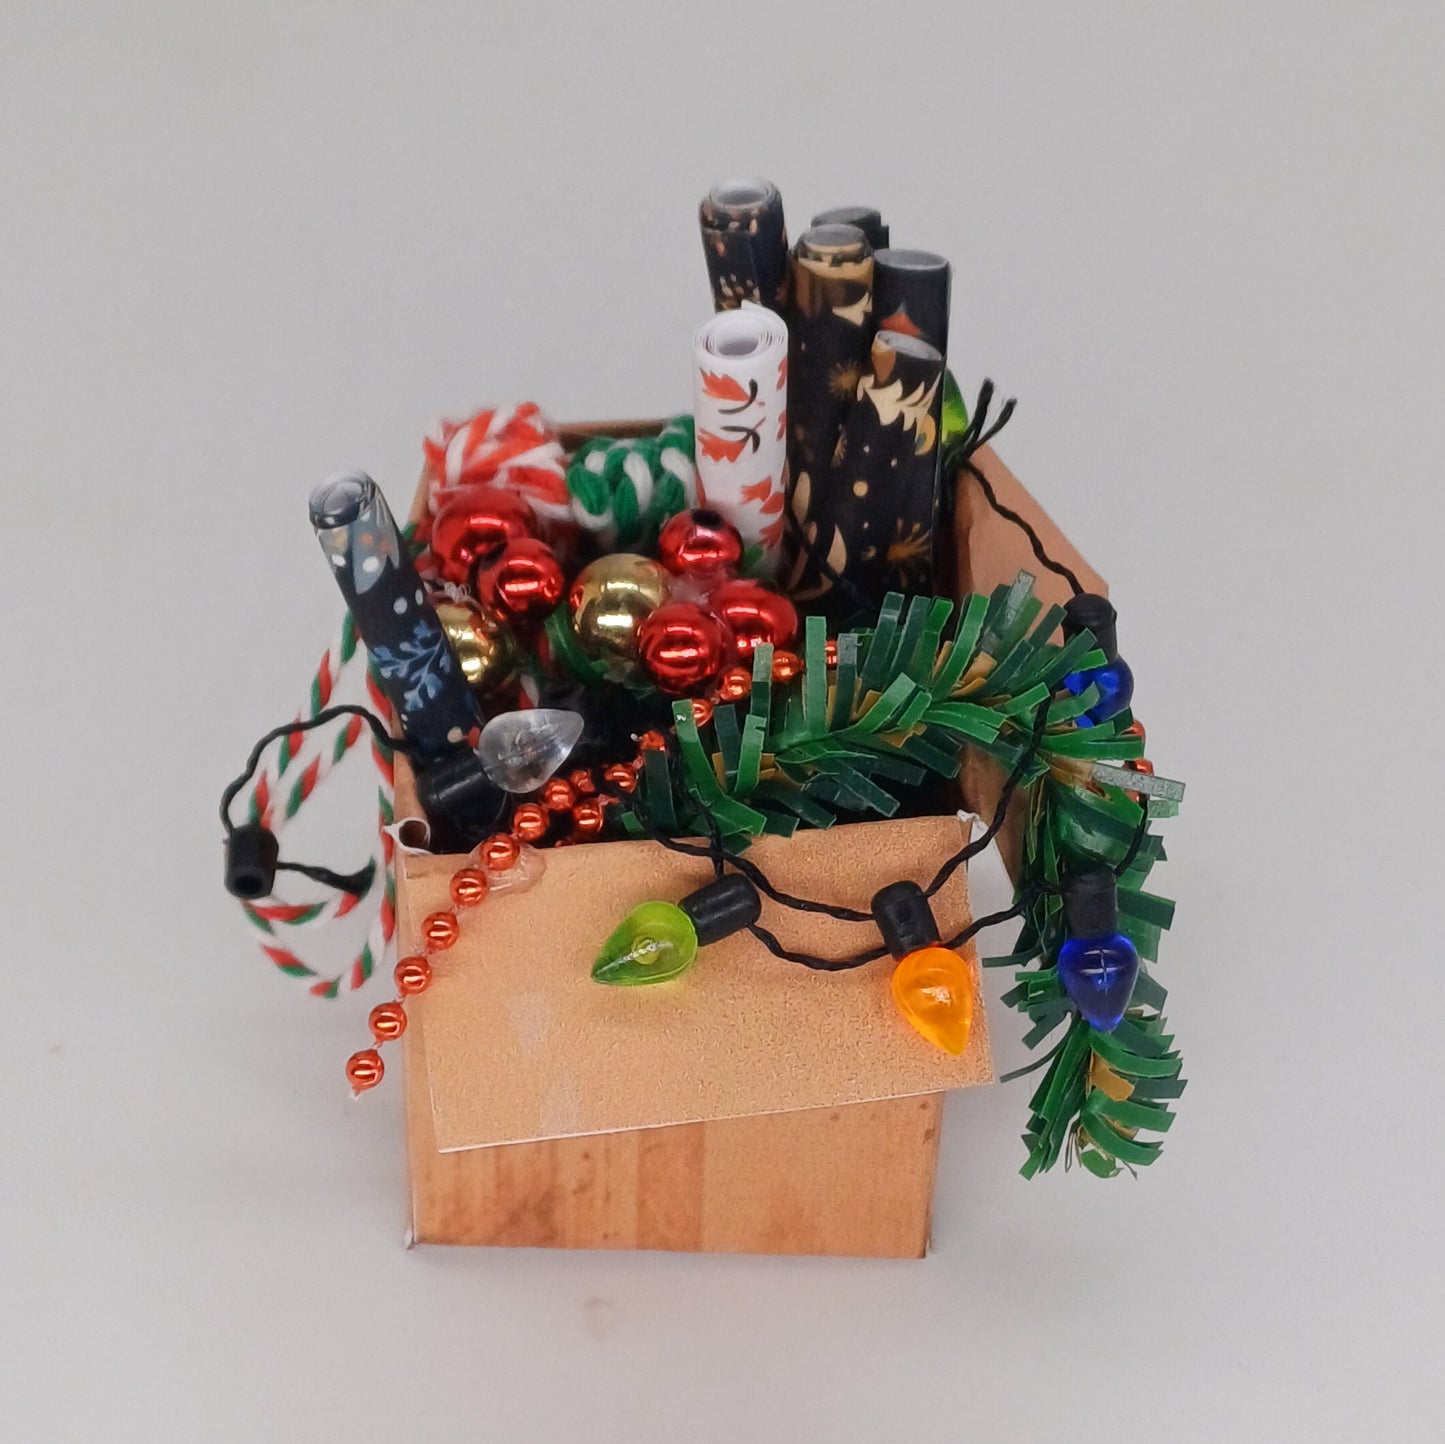 Kit de cartón de Navidad en miniatura escala 1:12